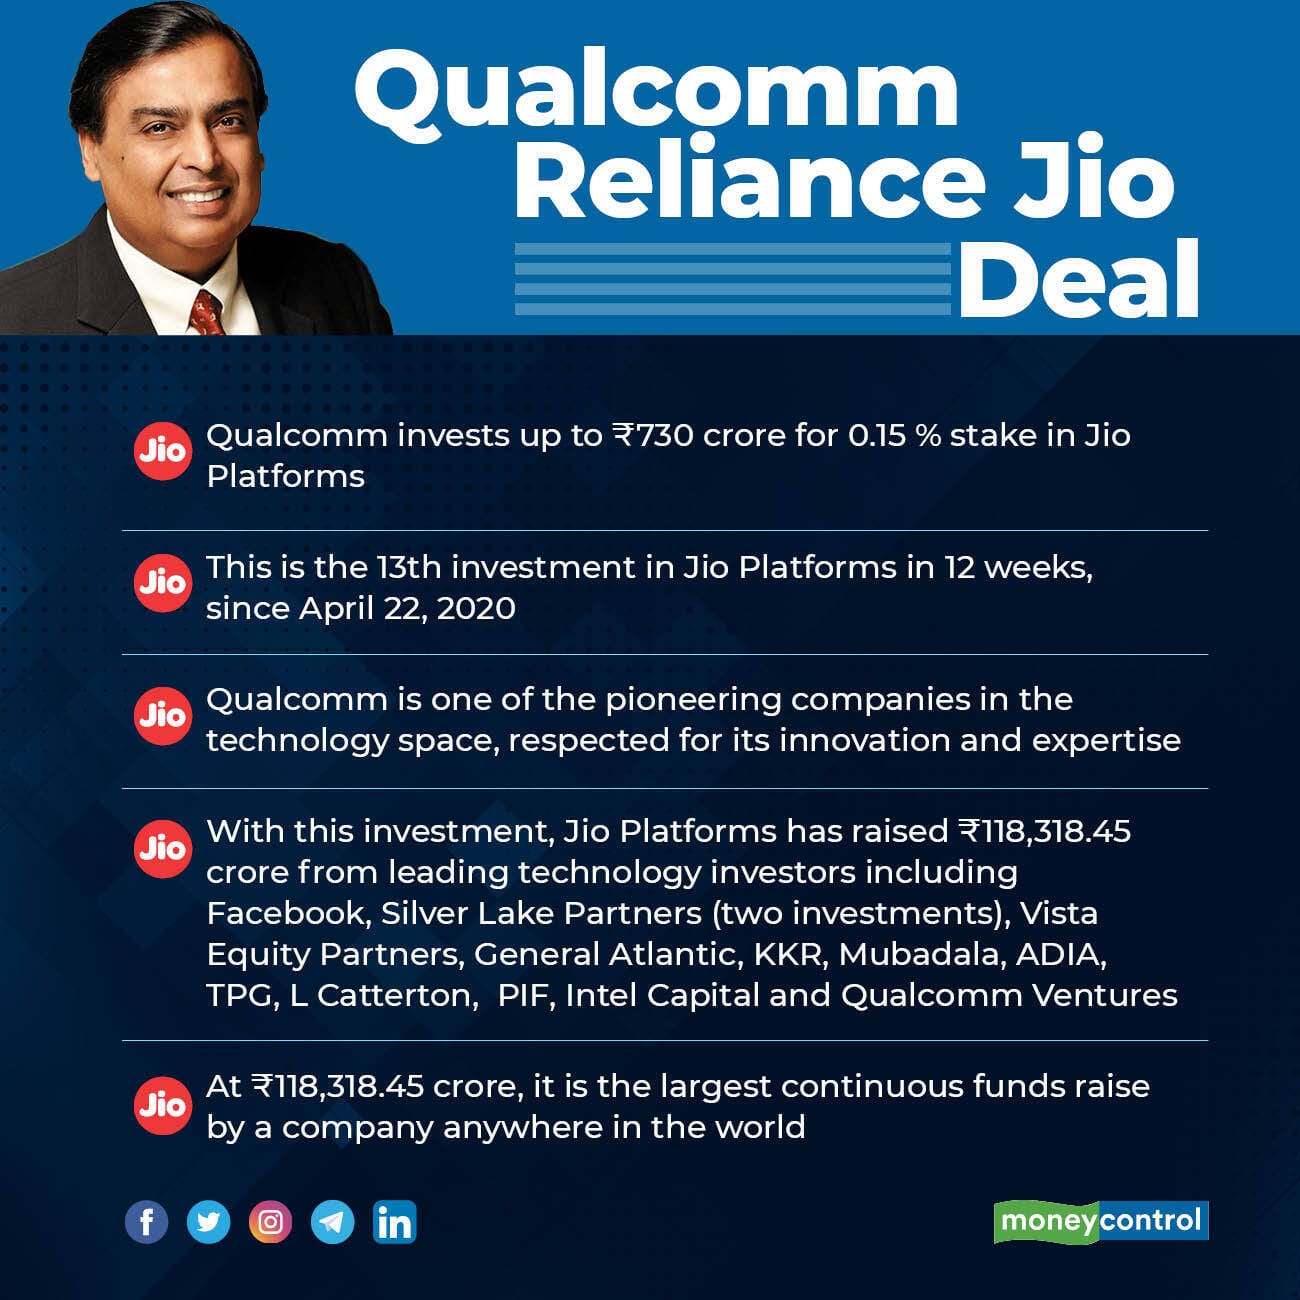 Qualcomm-Reliance Jio Deal